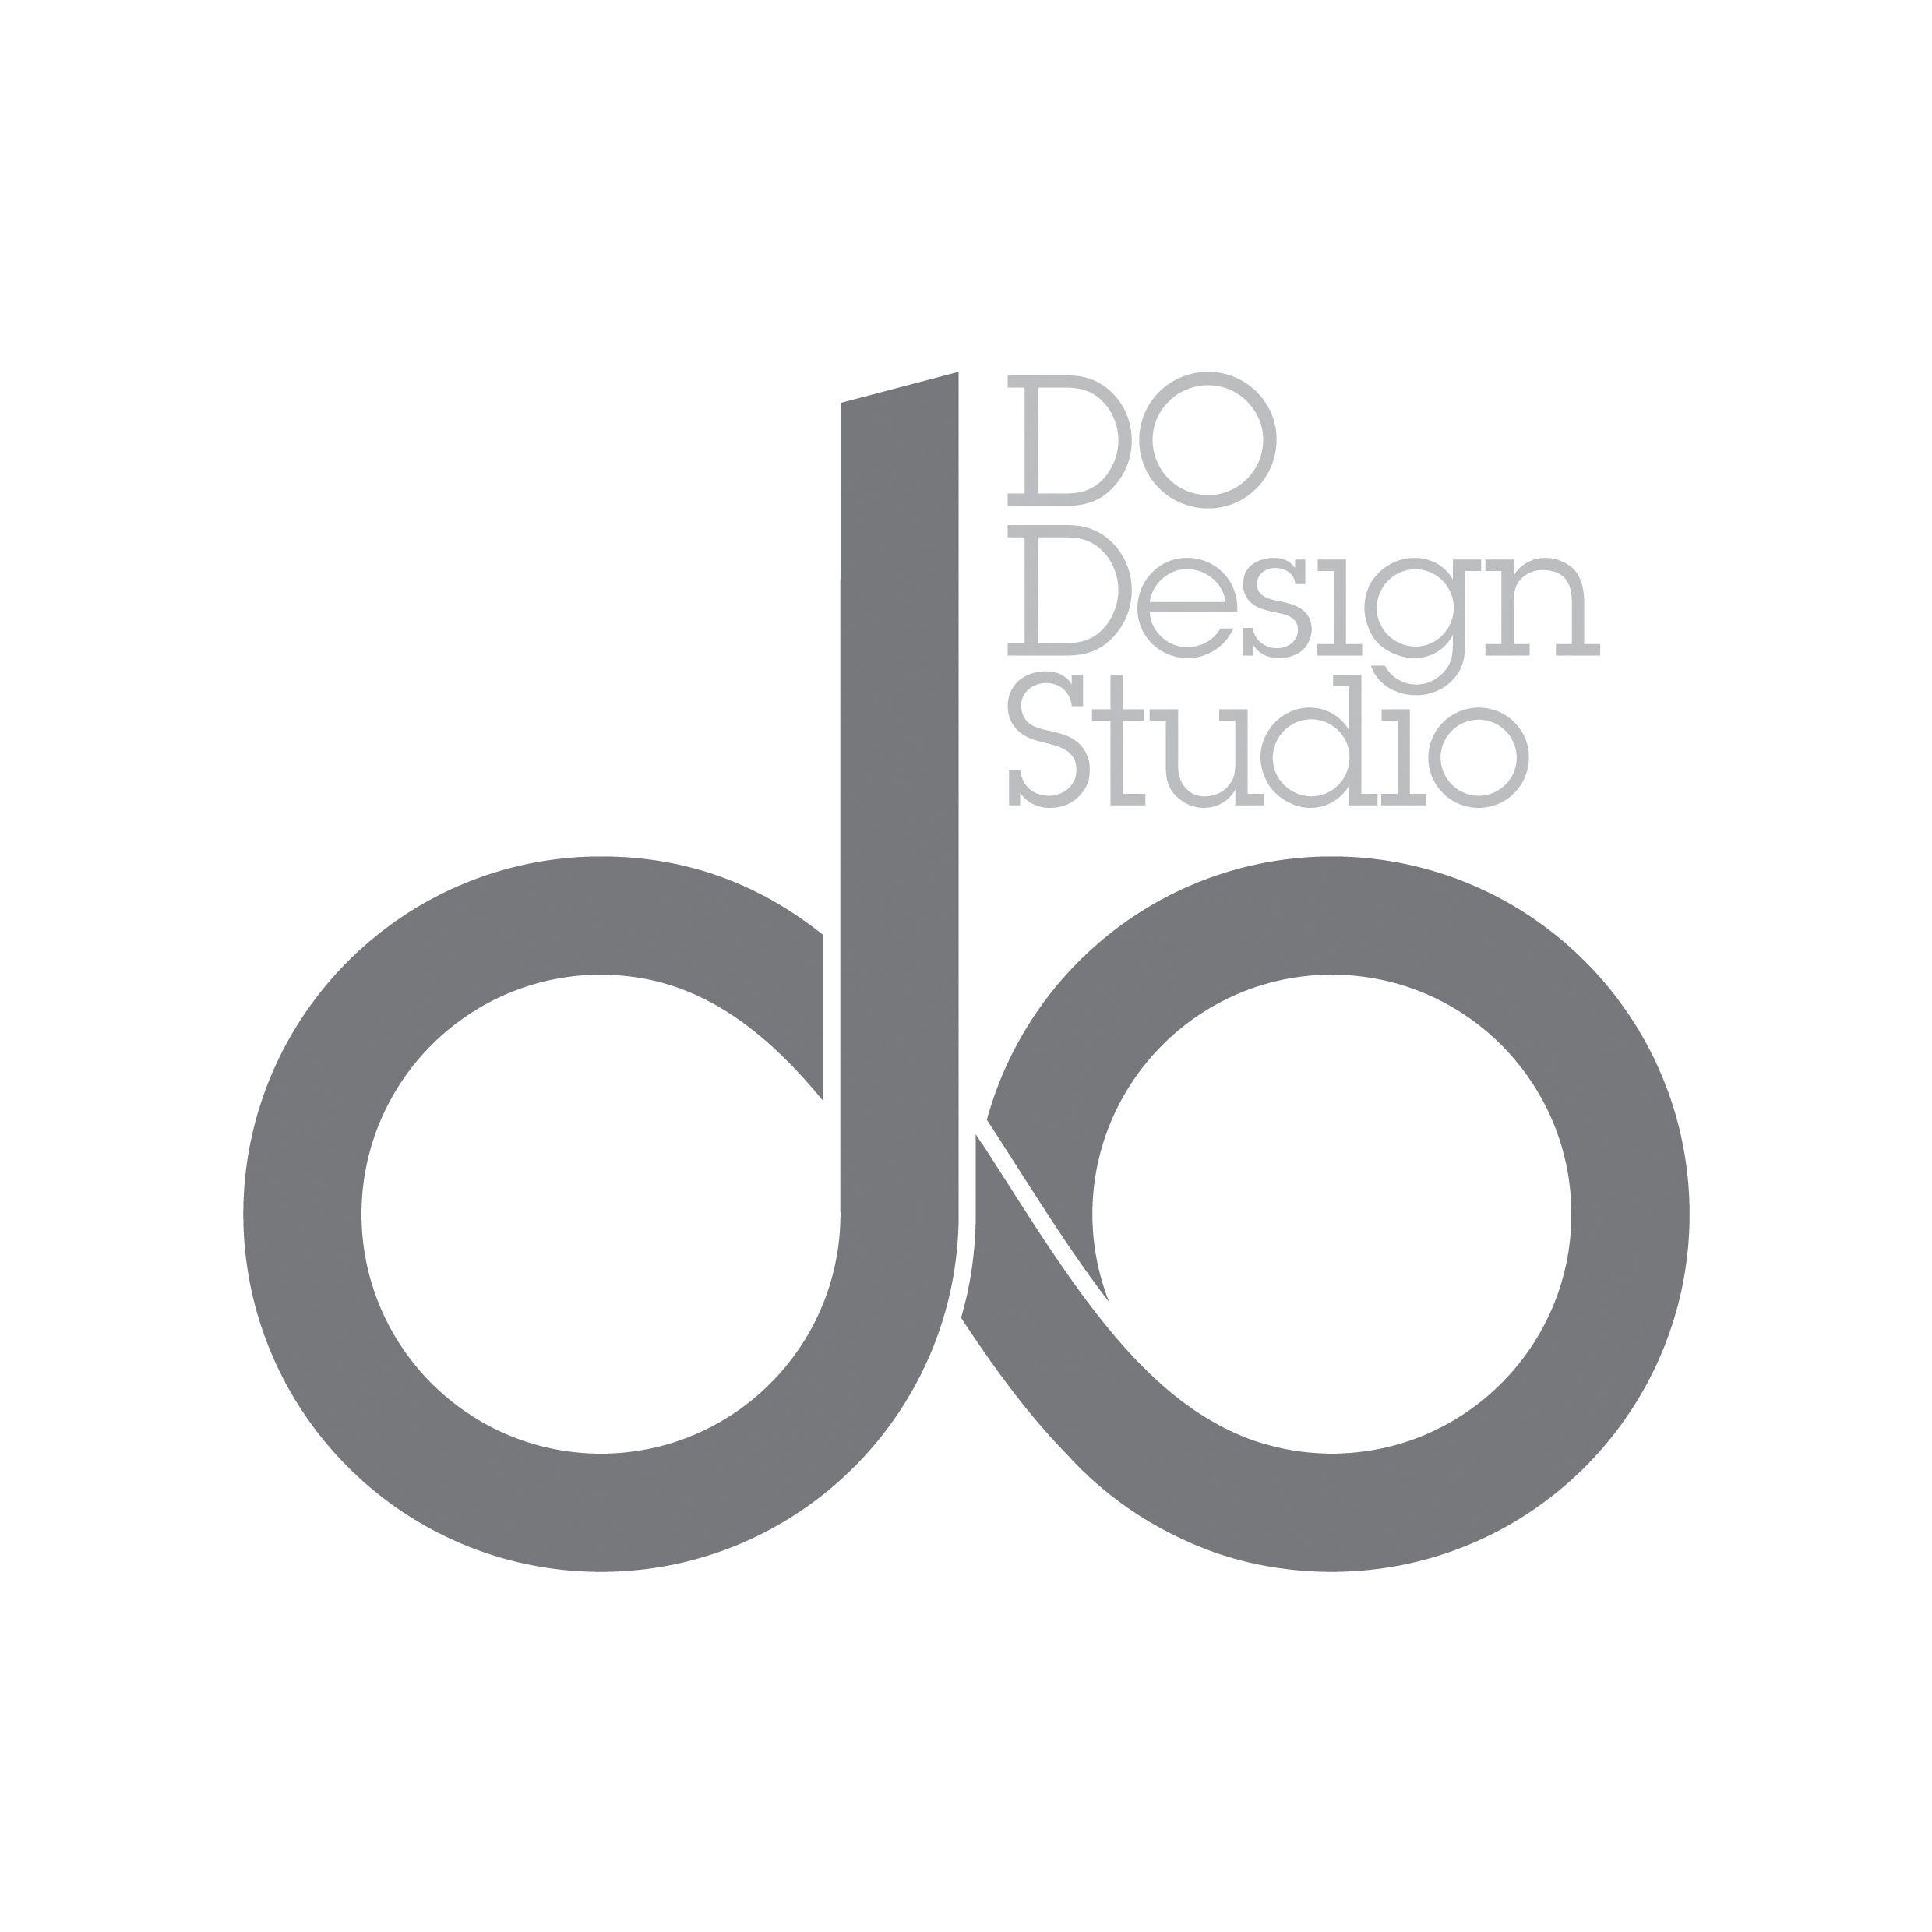 Do Logo - DO Design Studio: Interior Architects in London | homify